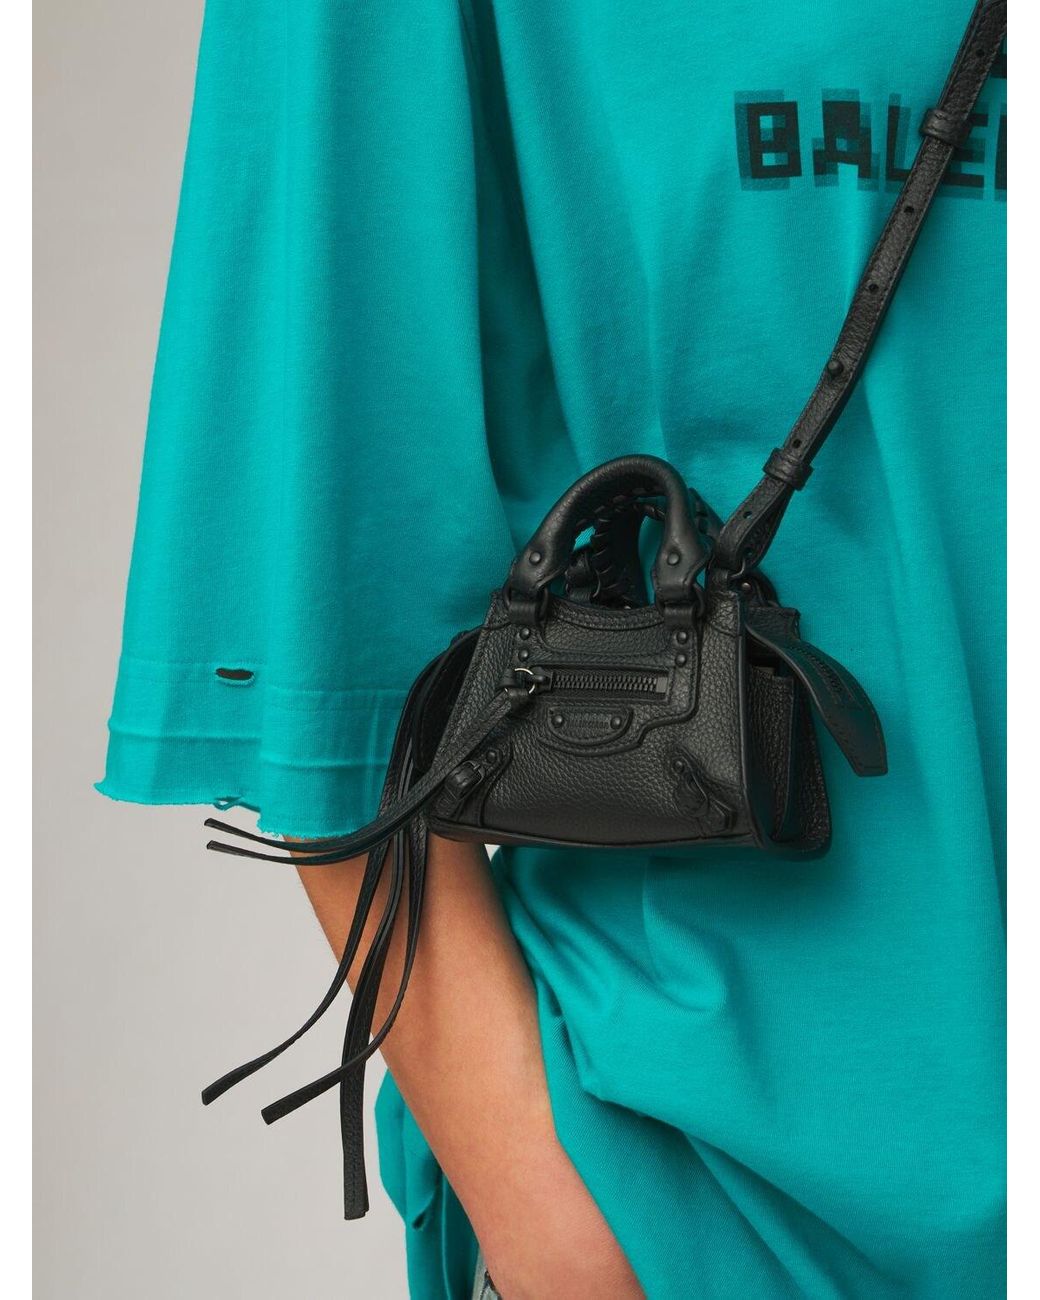 Balenciaga Nano Neo Classic Leather Shoulder Bag in Black